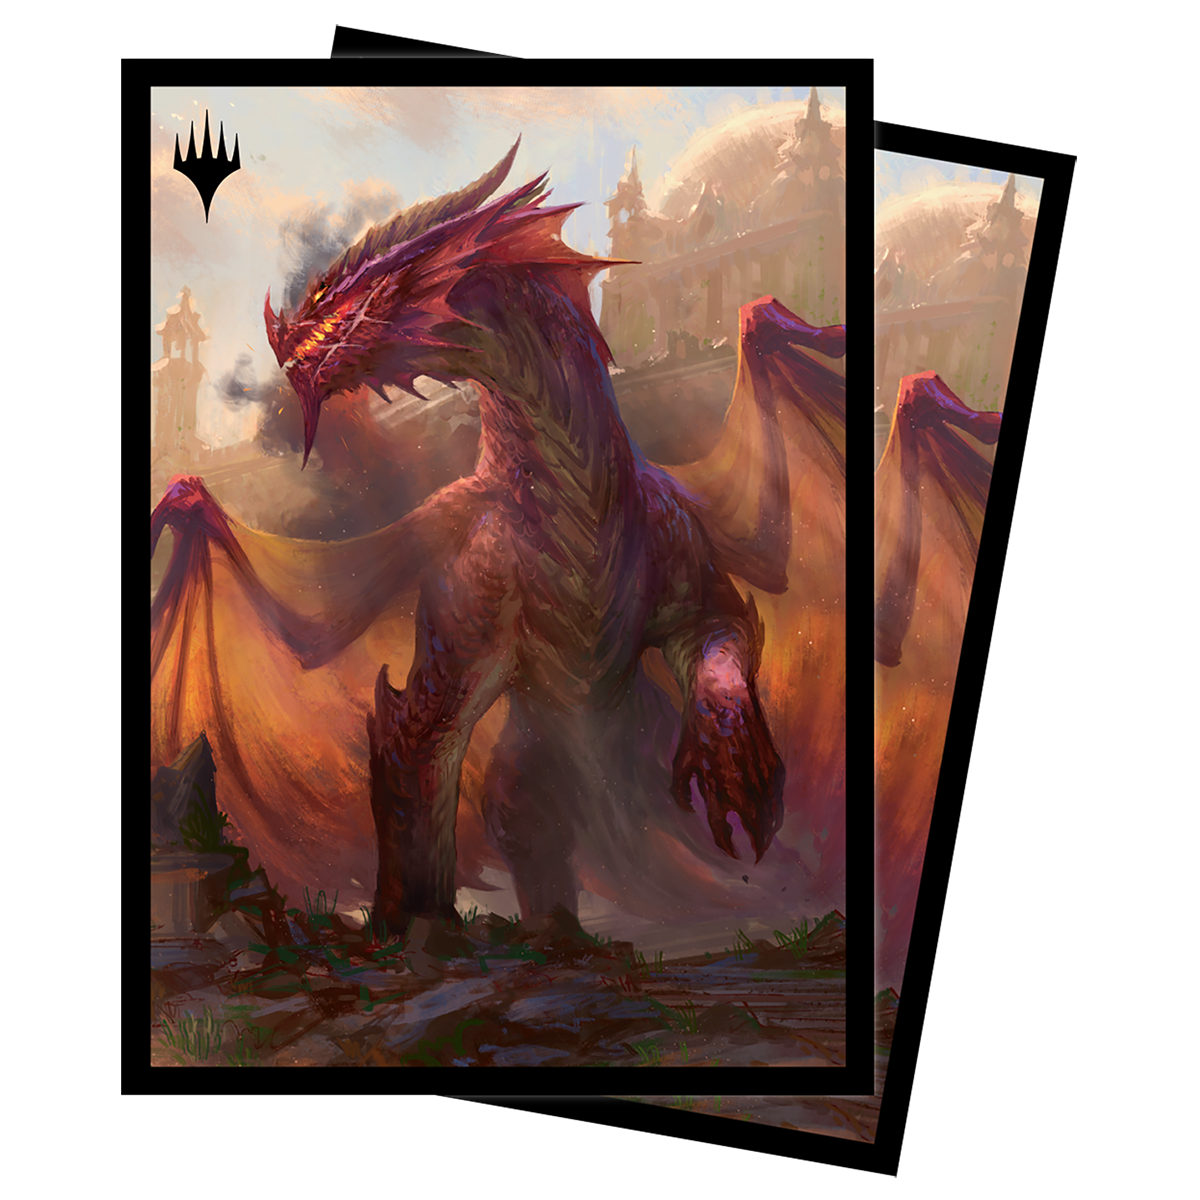 Commander Legends: Battle for Baldur's Gate Firkraag, Cunning Instigator Standard Deck Protector Sleeves (100ct) for Magic: The Gathering | Ultra PRO International